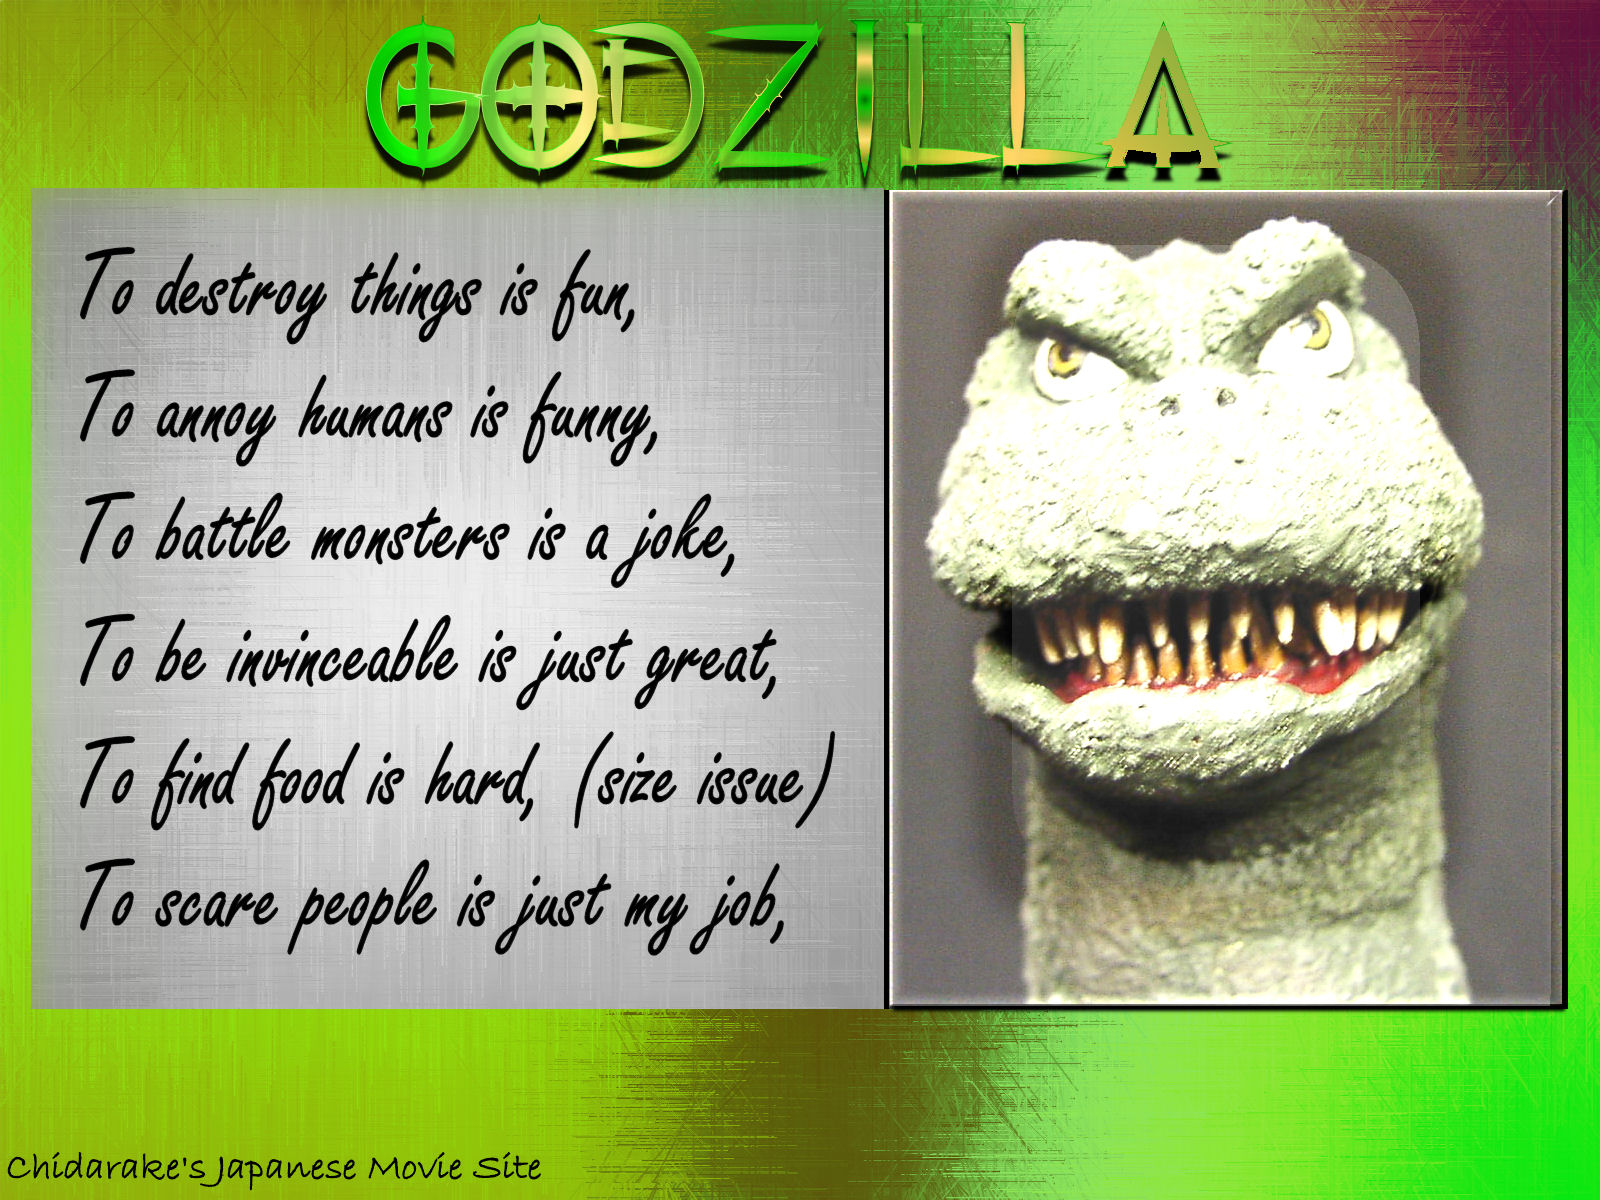 You are viewing the Godzilla wallpaper named Godzilla 4.